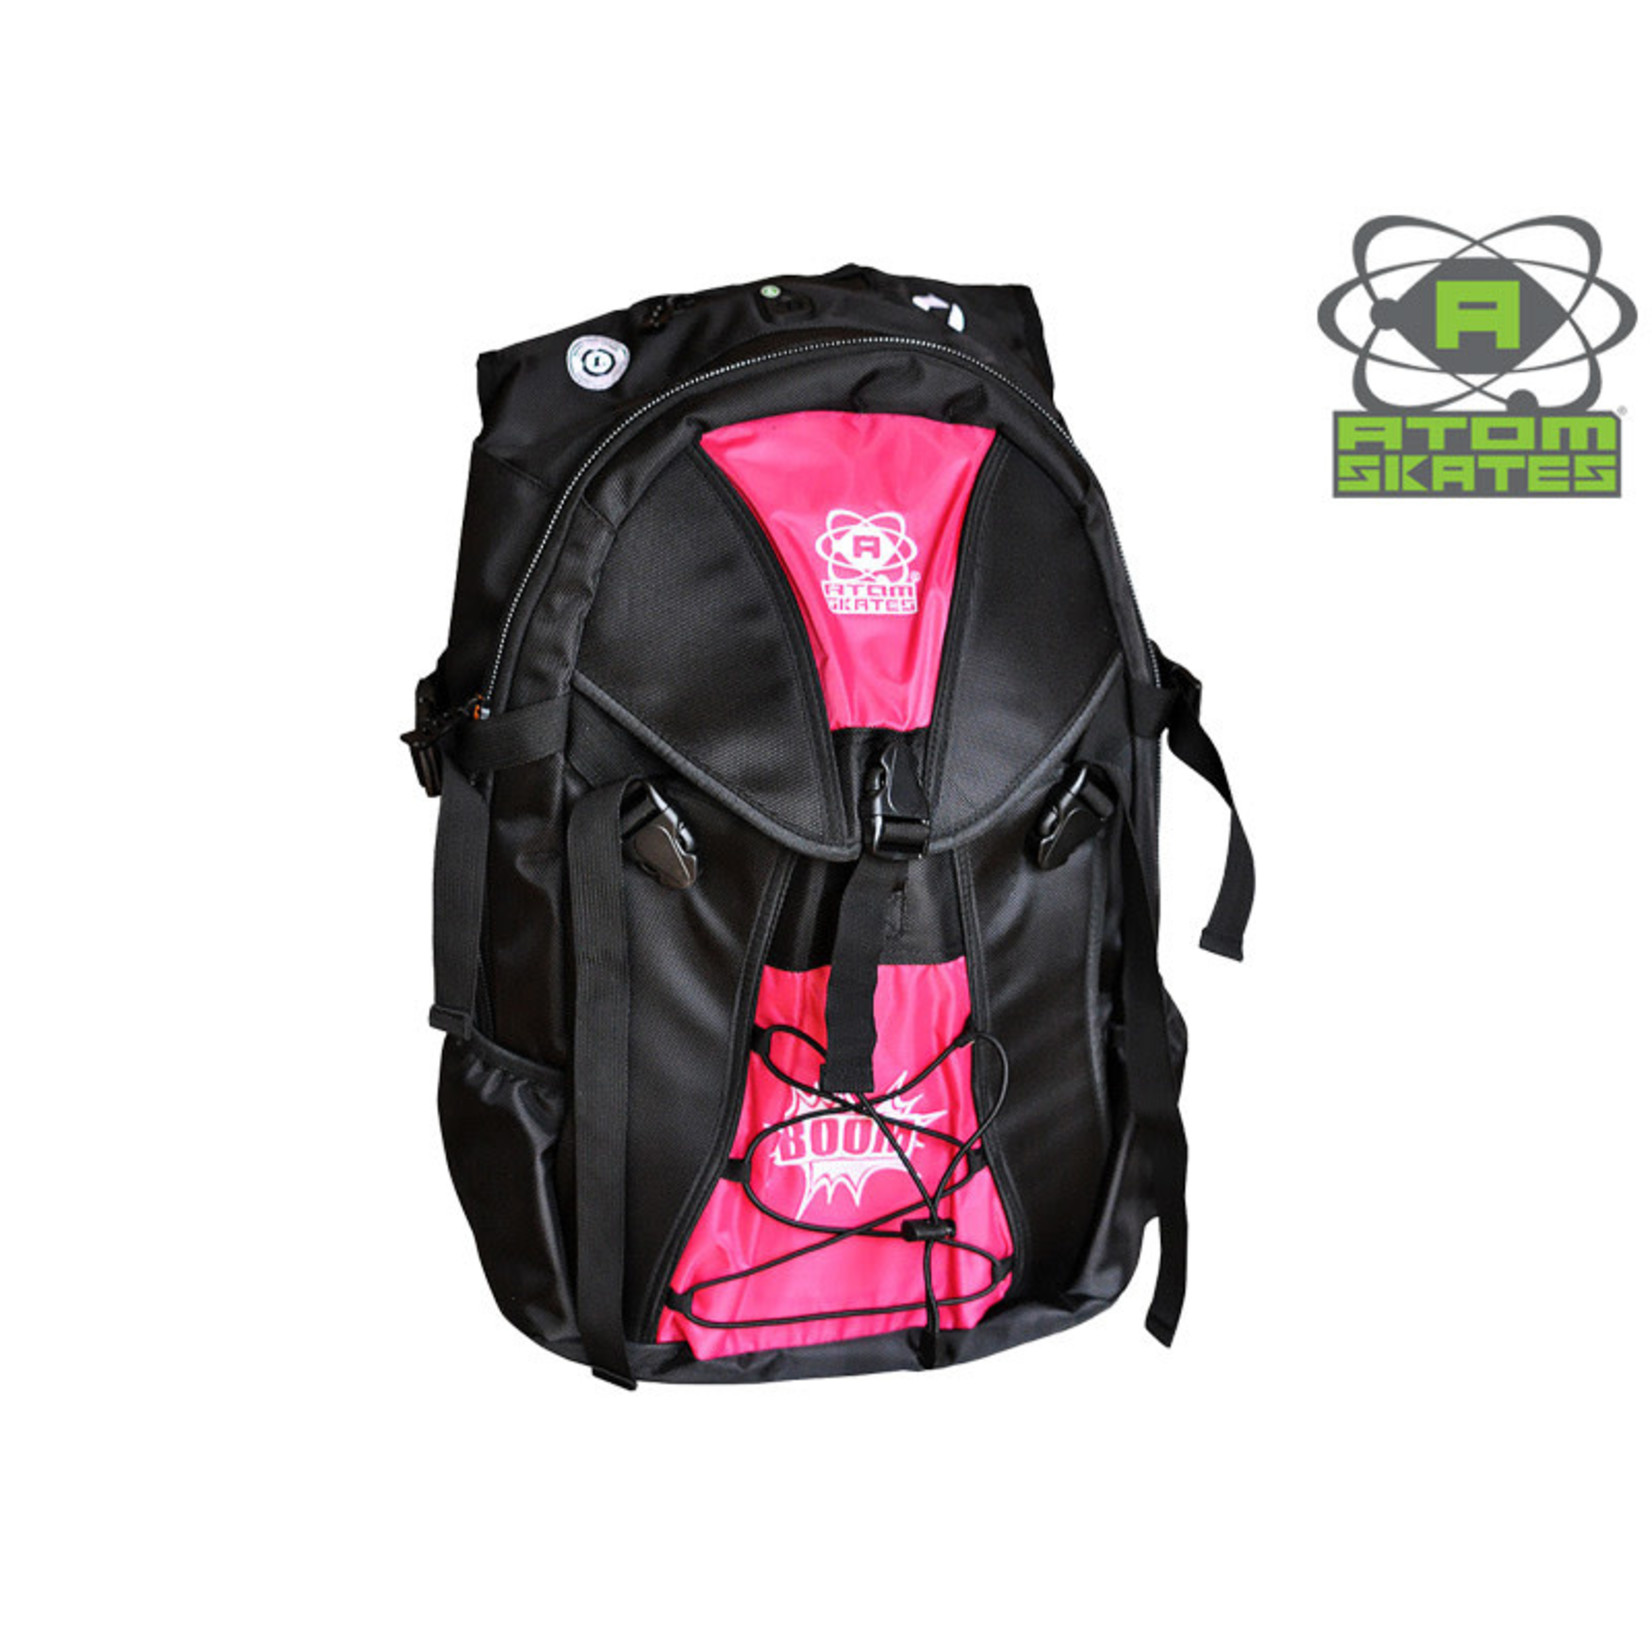 Atom Atom backpack